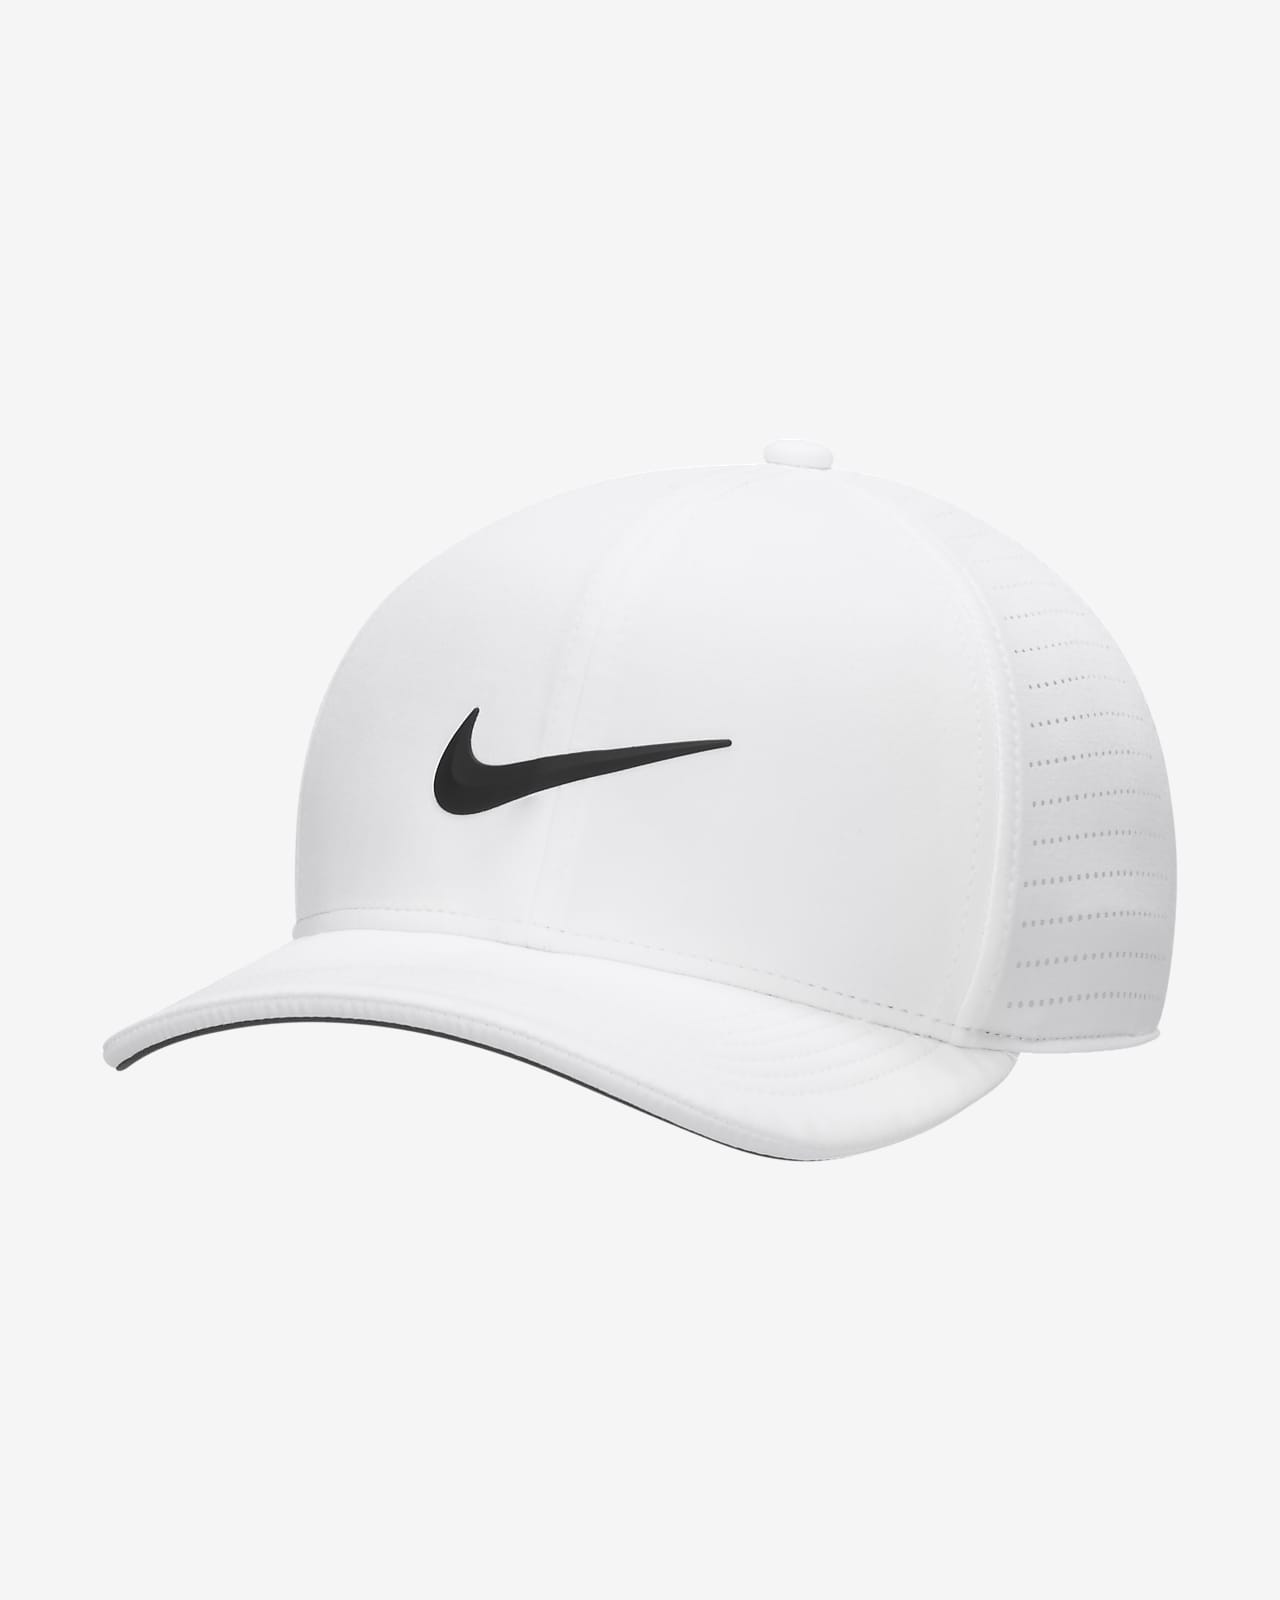 Obstinado objetivo Inevitable Nike Dri-FIT ADV Classic99 Perforated Golf Hat. Nike NL